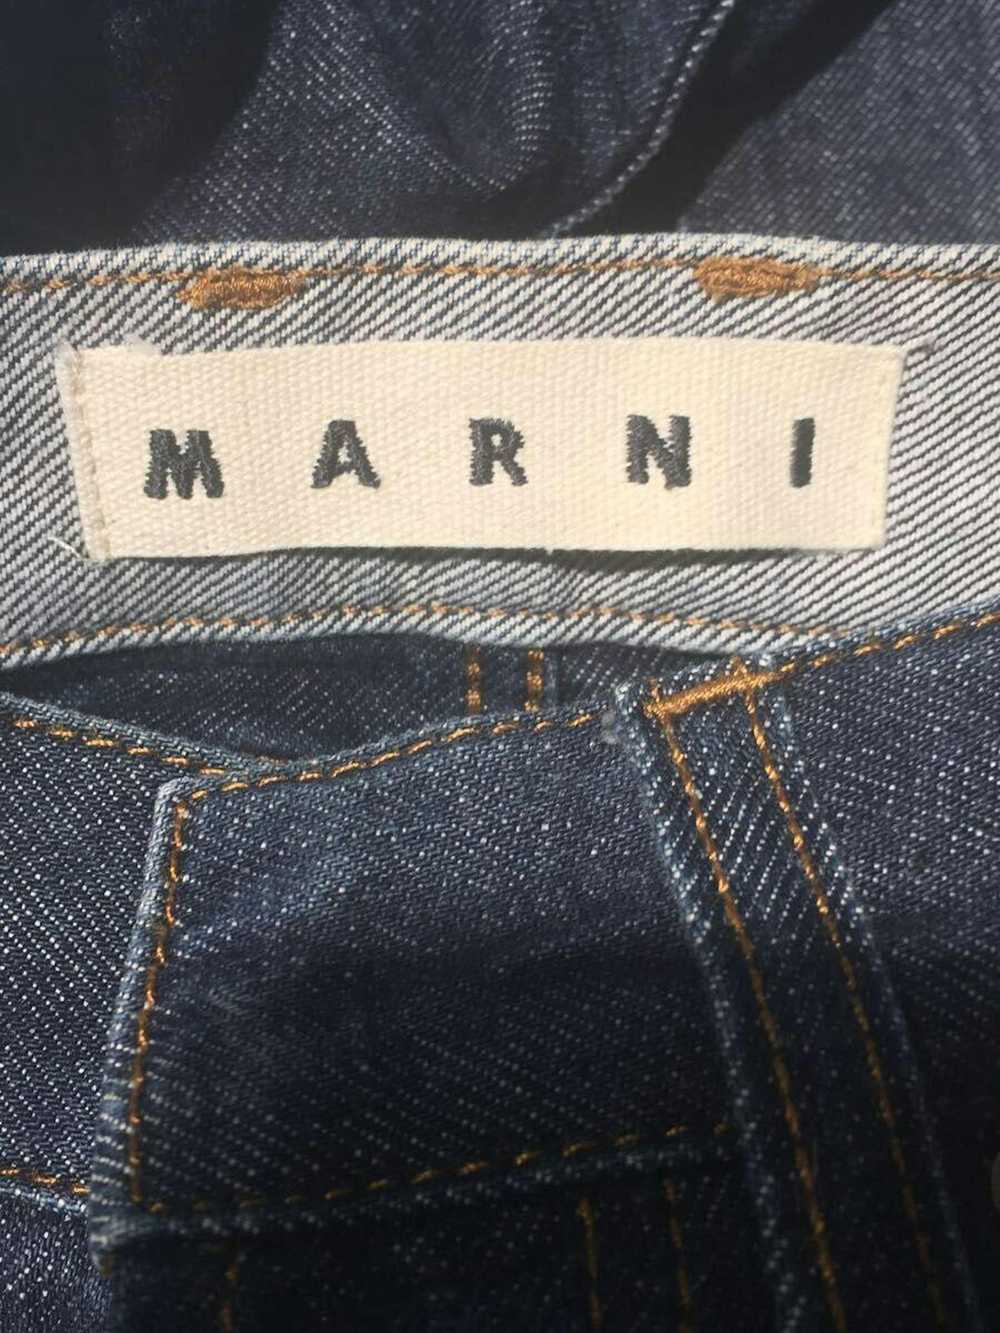 Marni SS15 Patchwork Denim Jeans - image 3